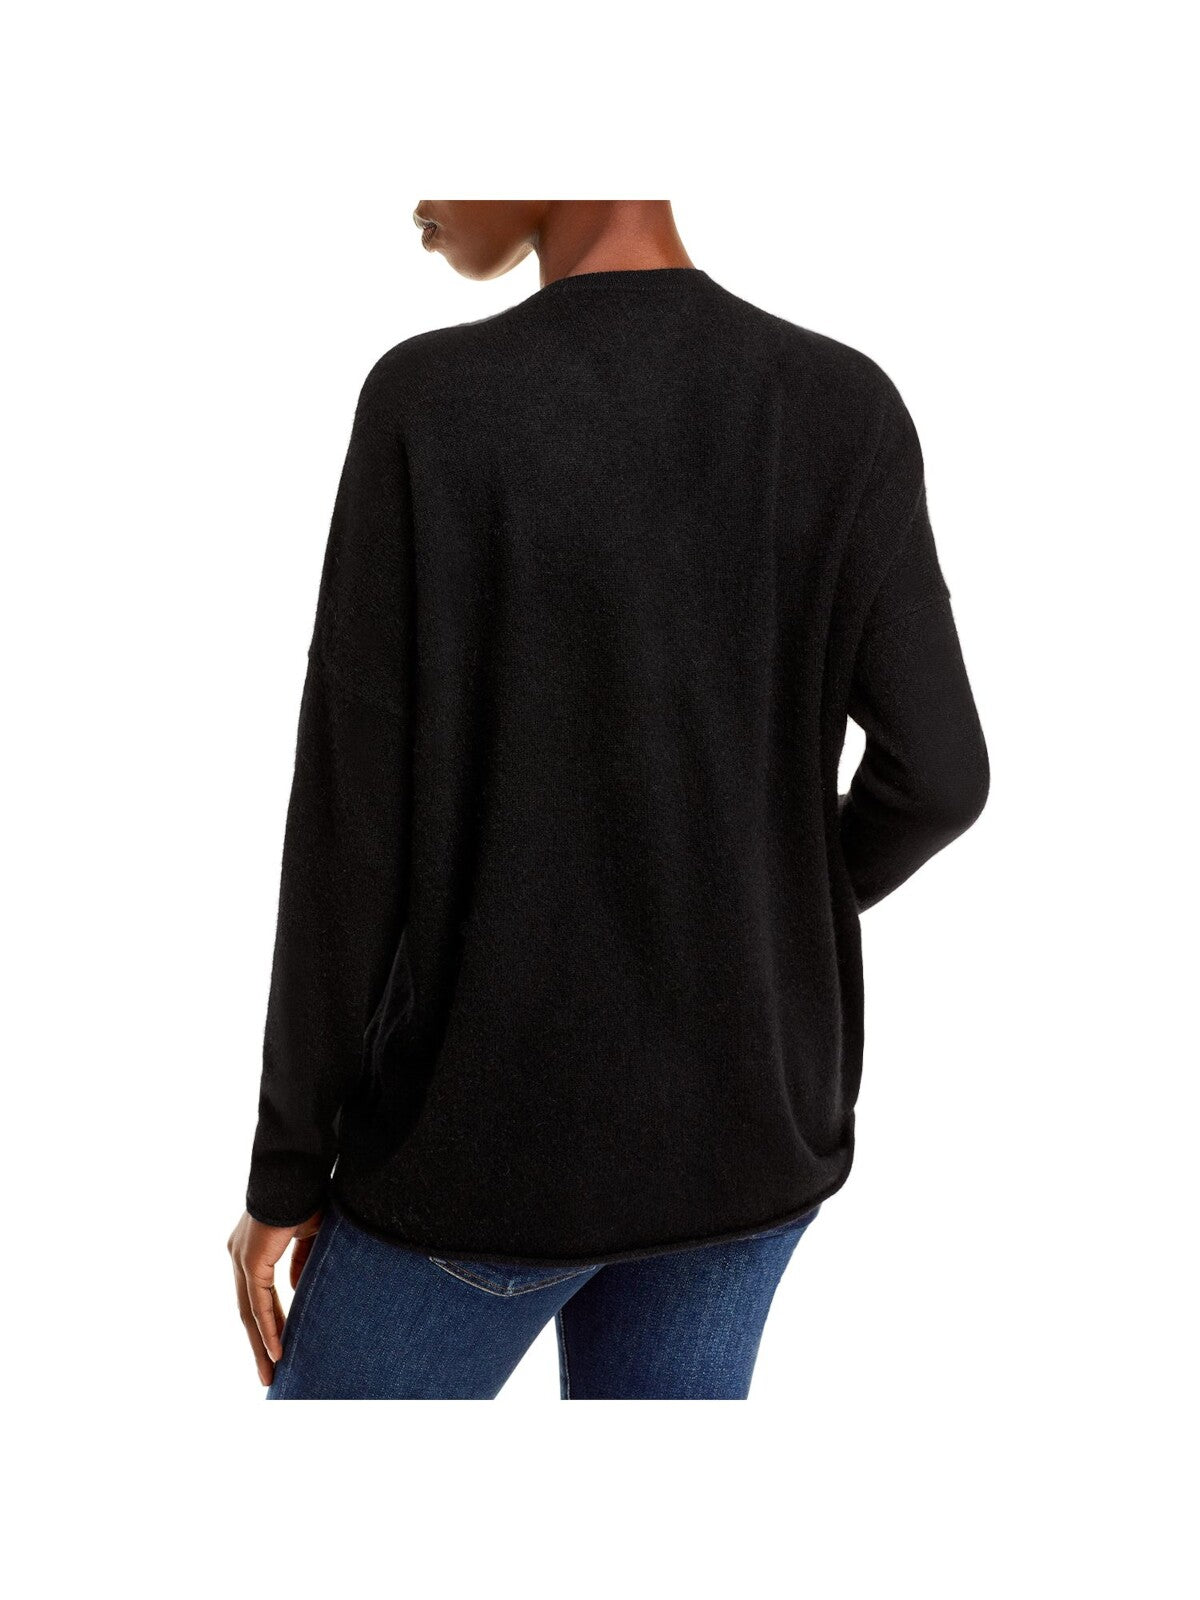 Designer Brand Womens Black Cashmere Long Sleeve V Neck Wear To Work Sweater S